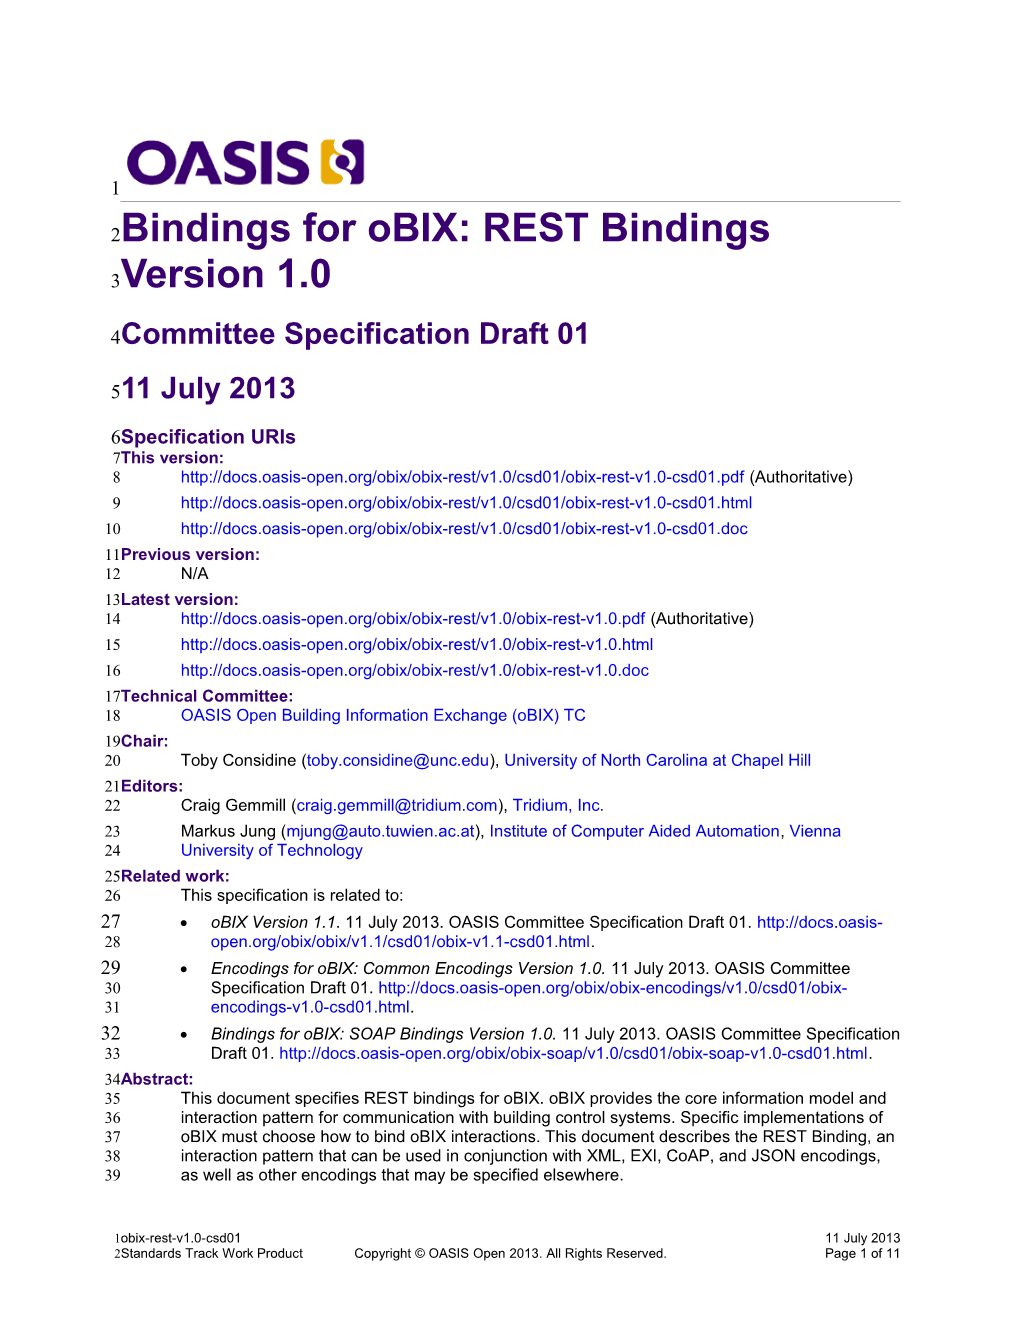 Bindings for Obix: REST Bindings Version 1.0